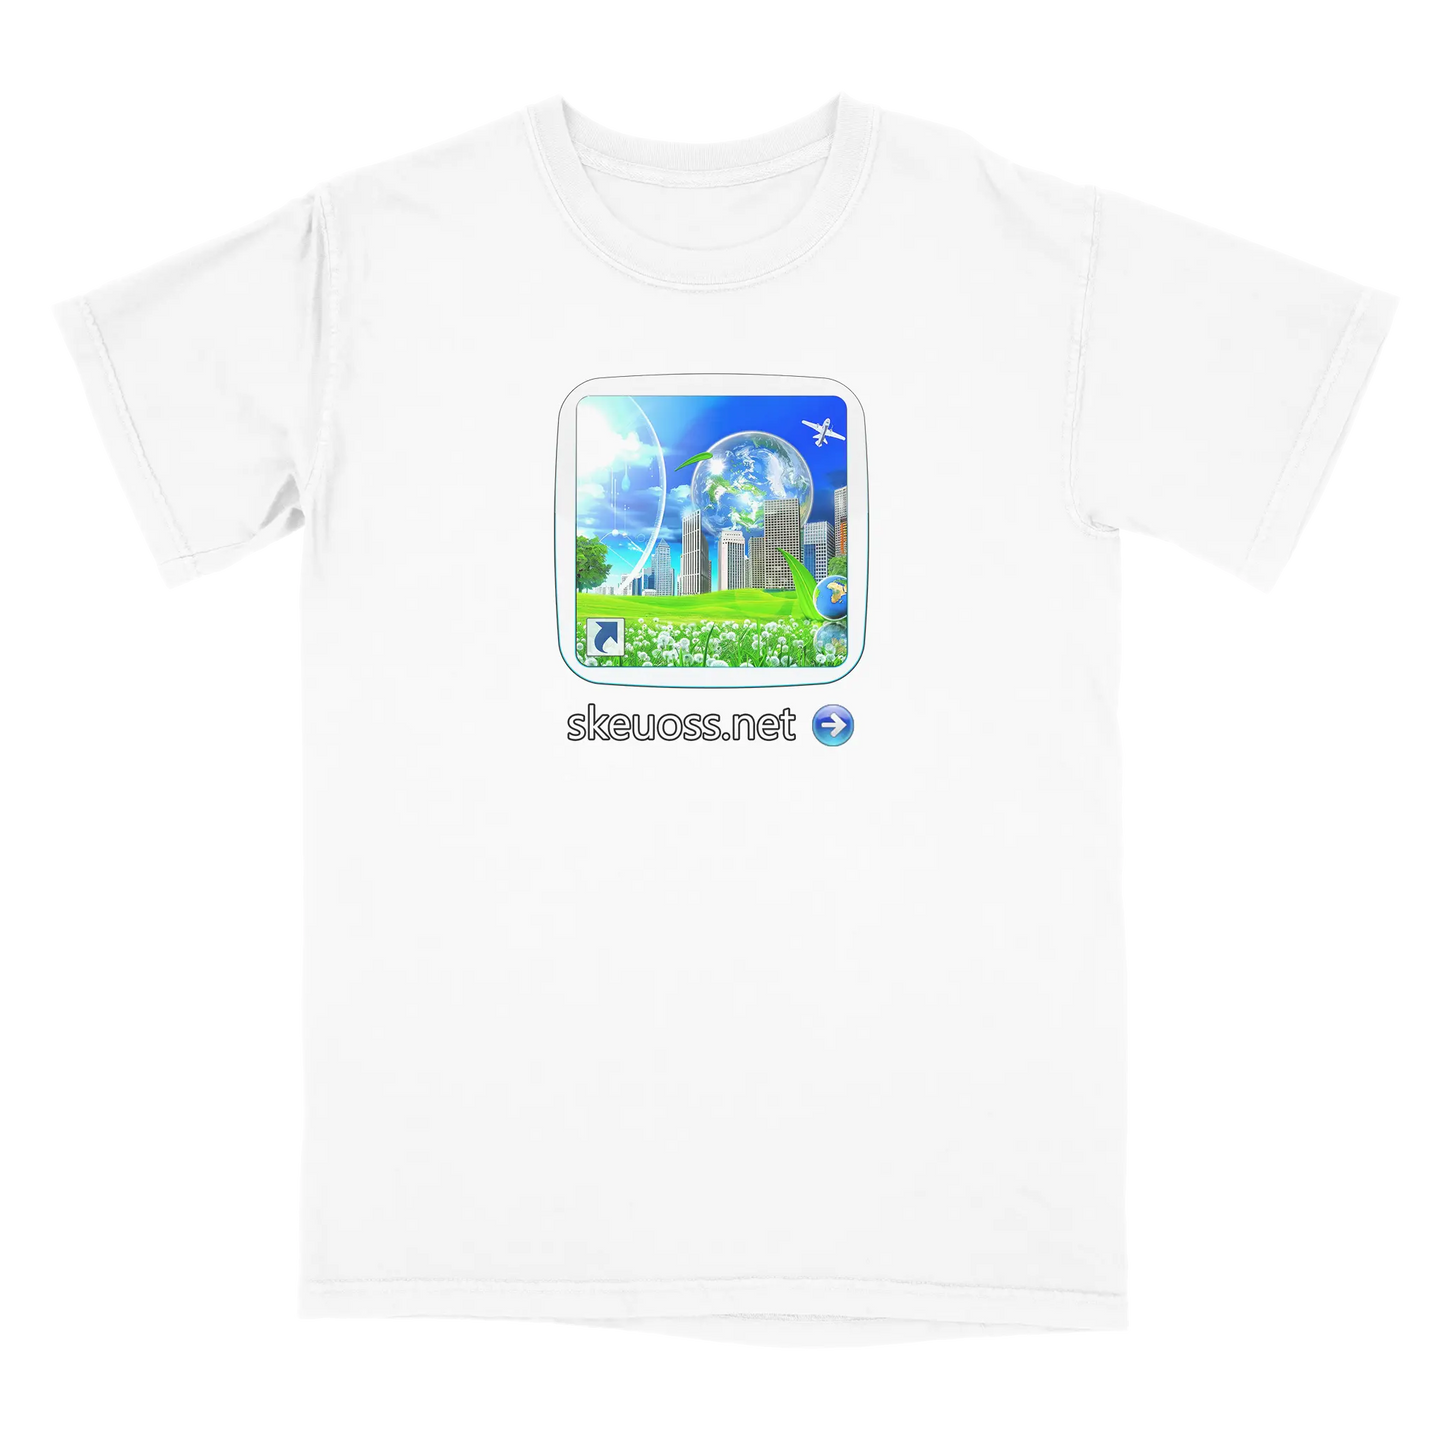 Frutiger Aero T-shirt - User Login Collection - User 397